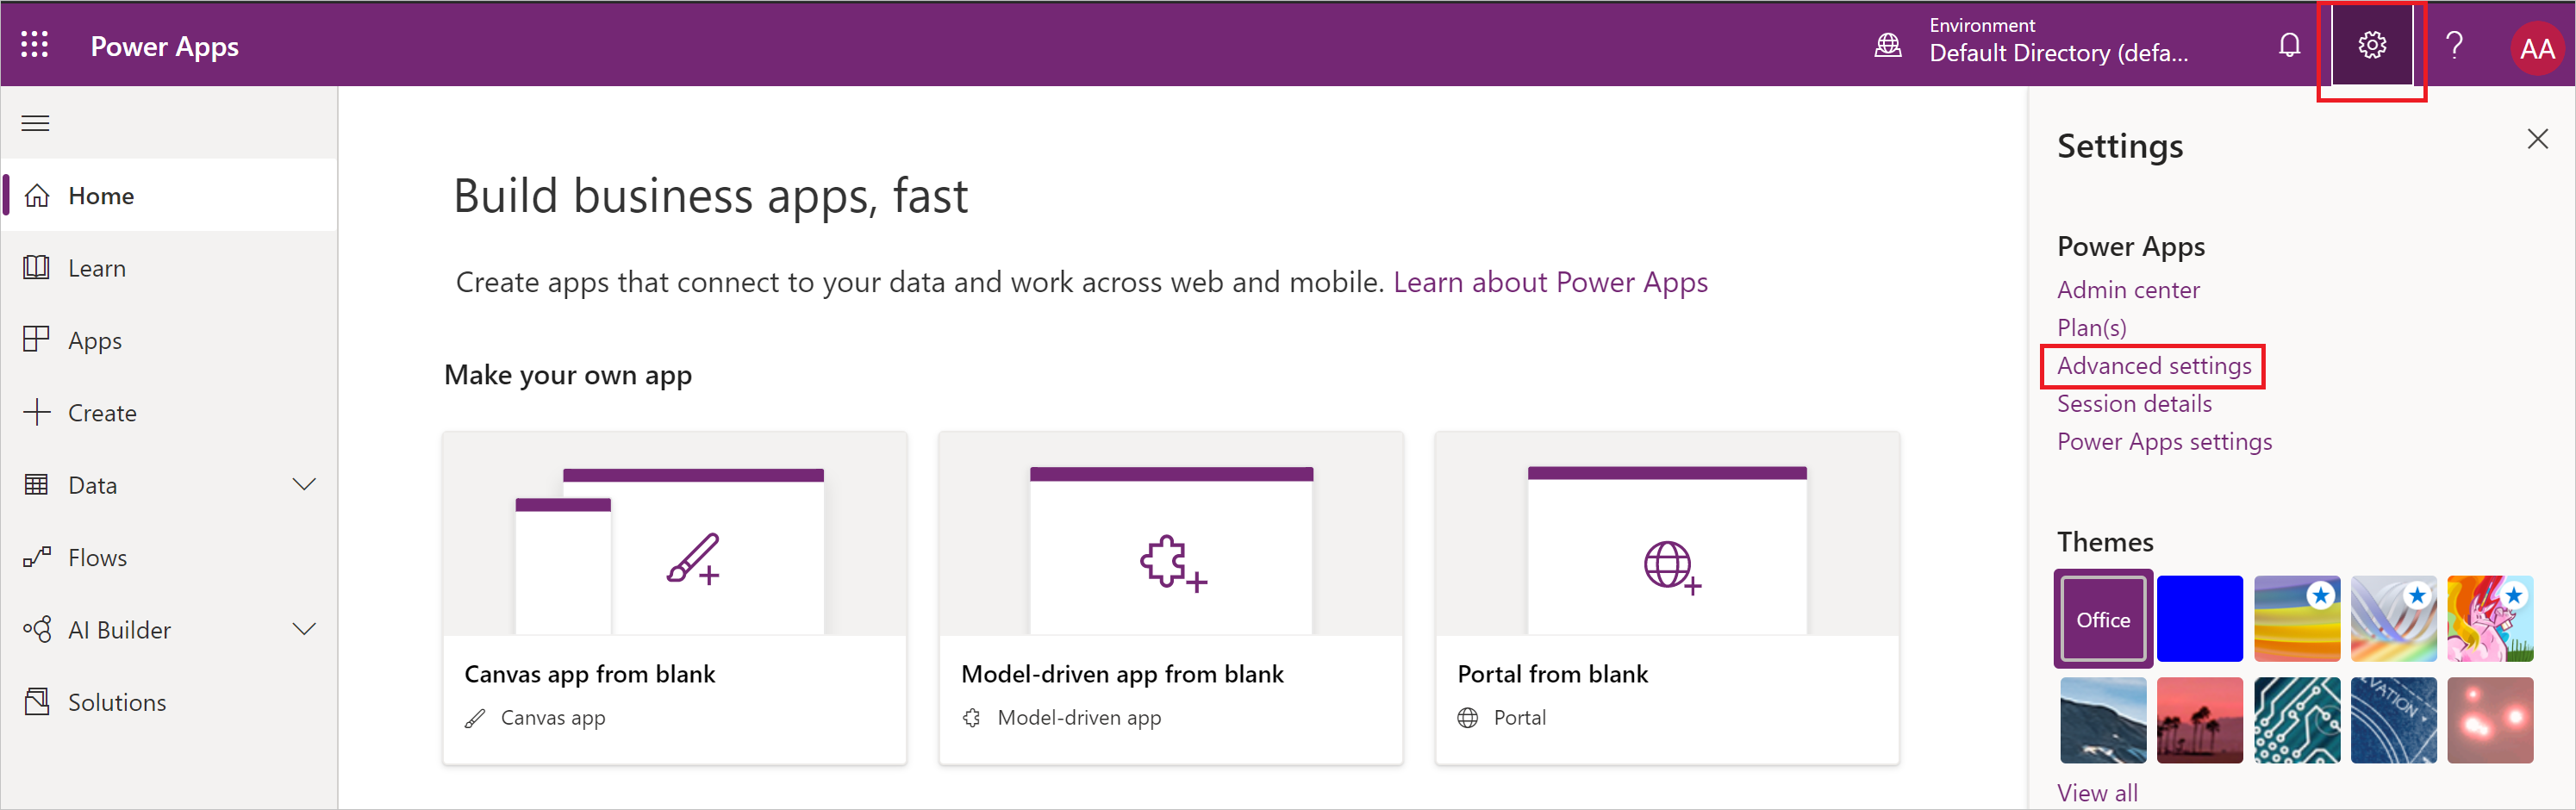 Power Apps 设置菜单的屏幕截图，其中突出显示了“高级设置”。